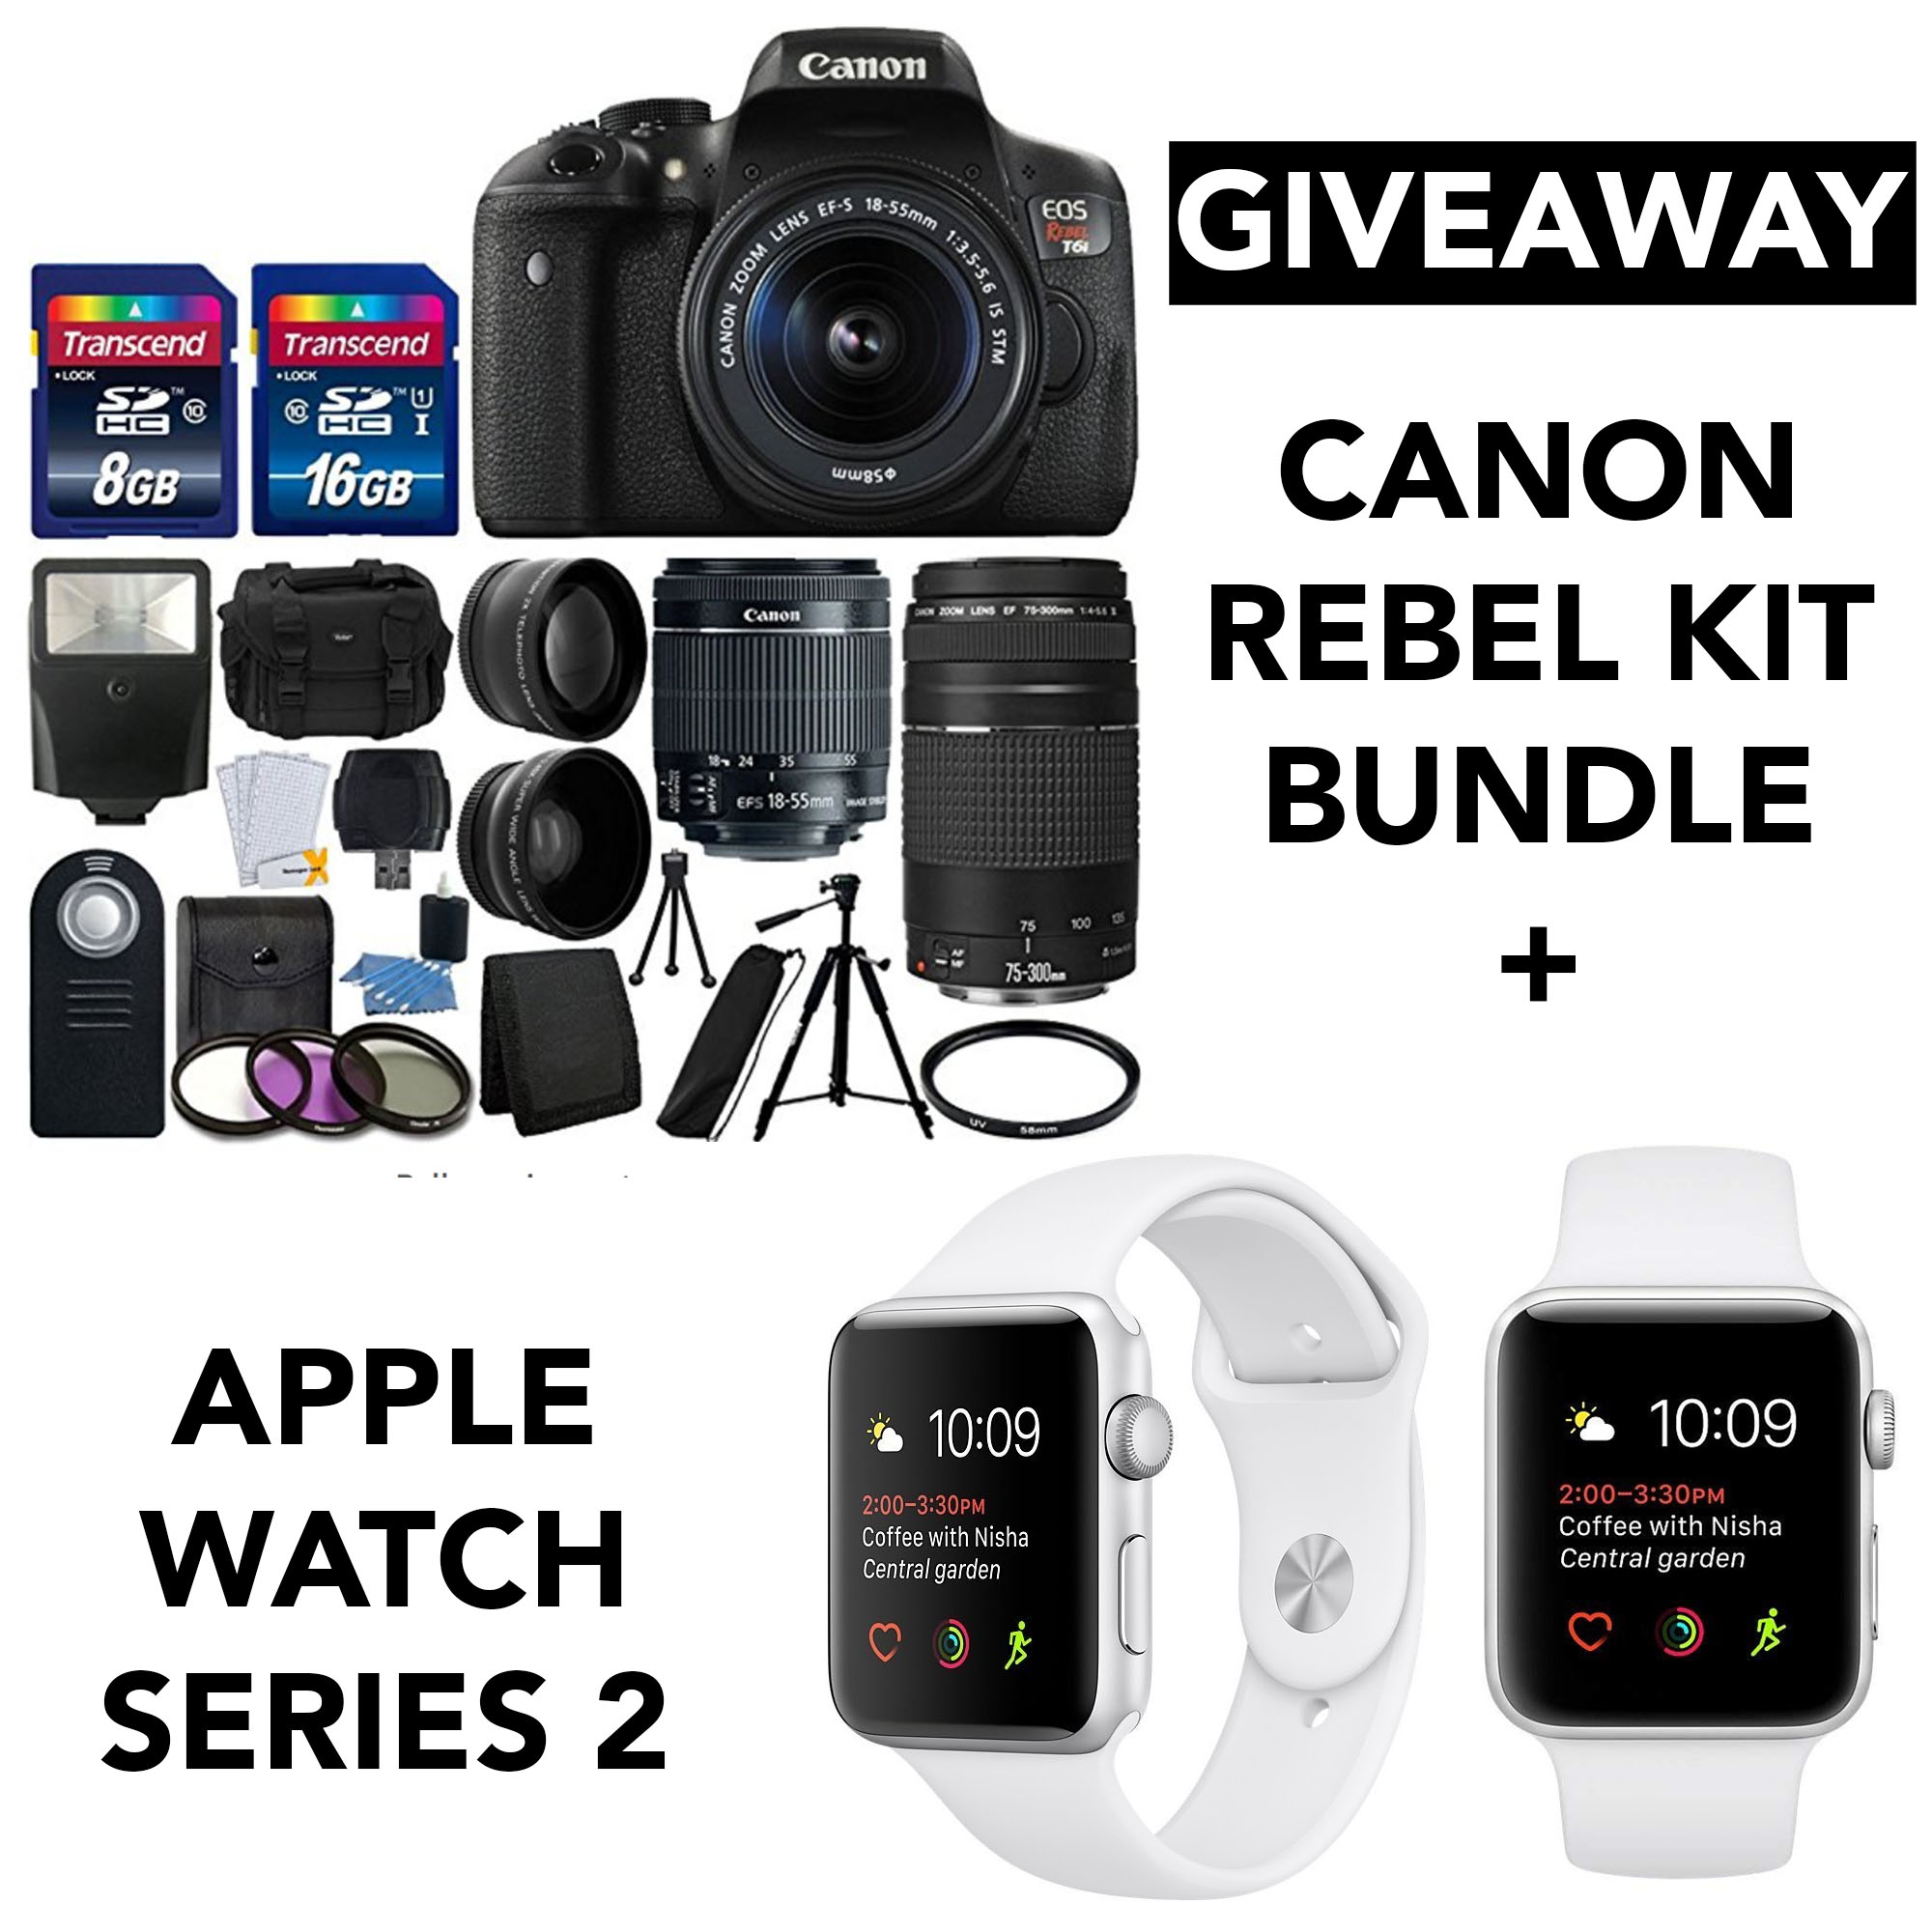 Cannon Rebel Bundle + Apple Watch Giveaway!